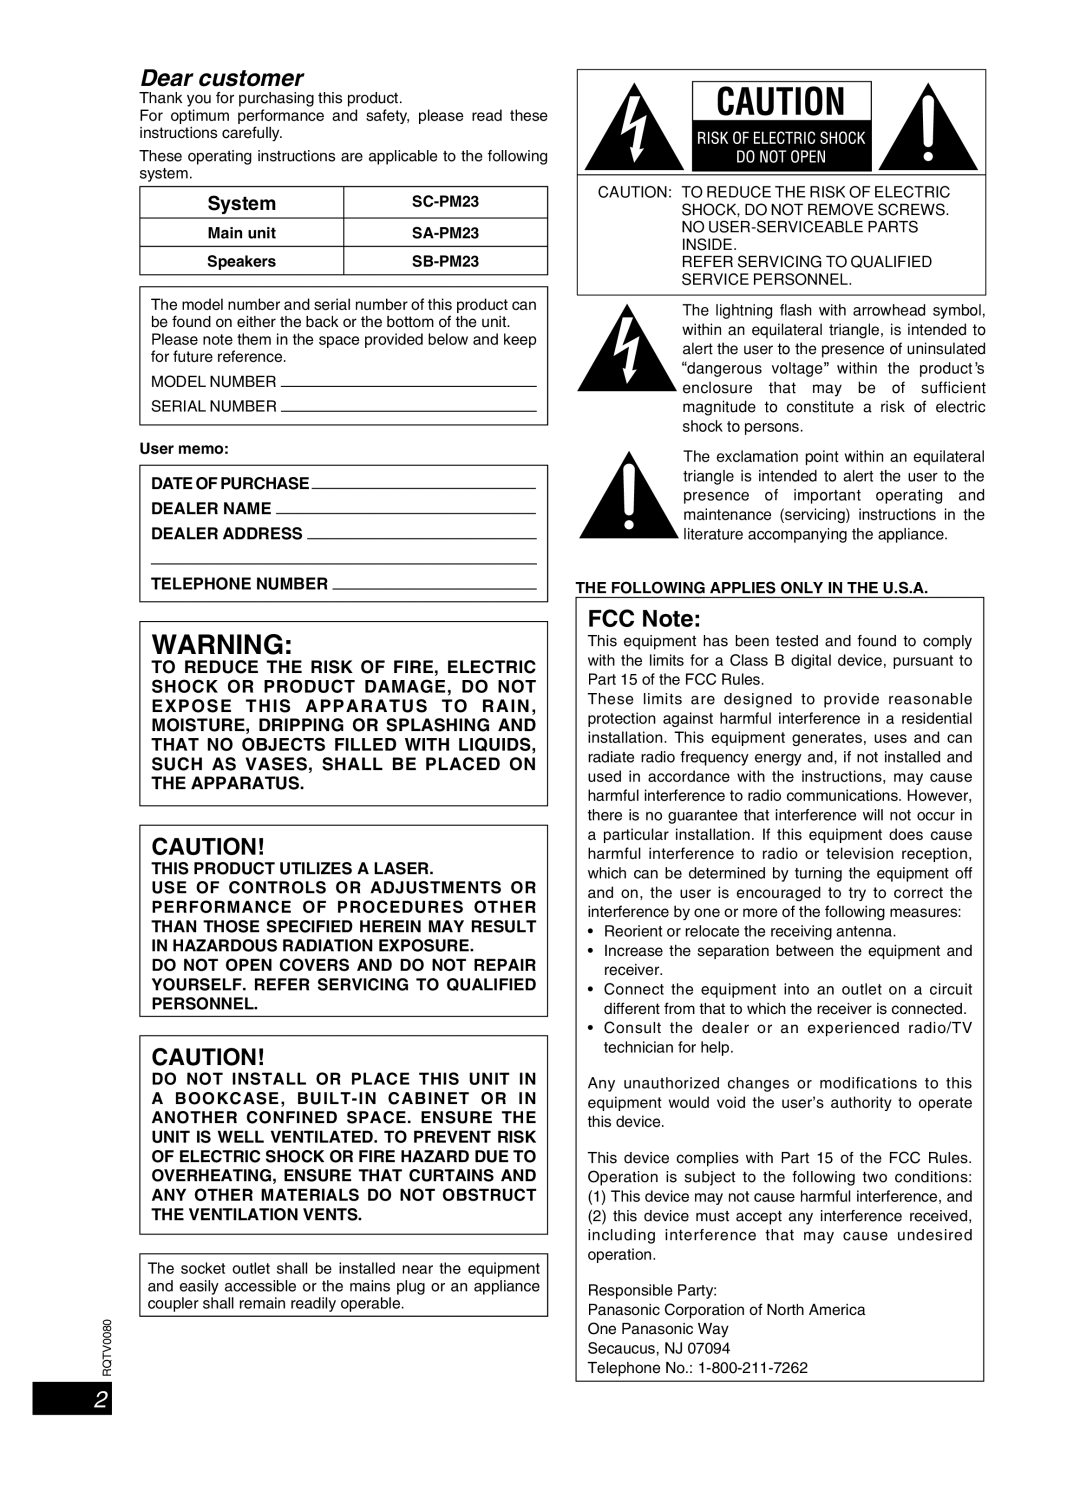 Panasonic SC-PM23, RQTV0080-1P important safety instructions FCC Note, System 